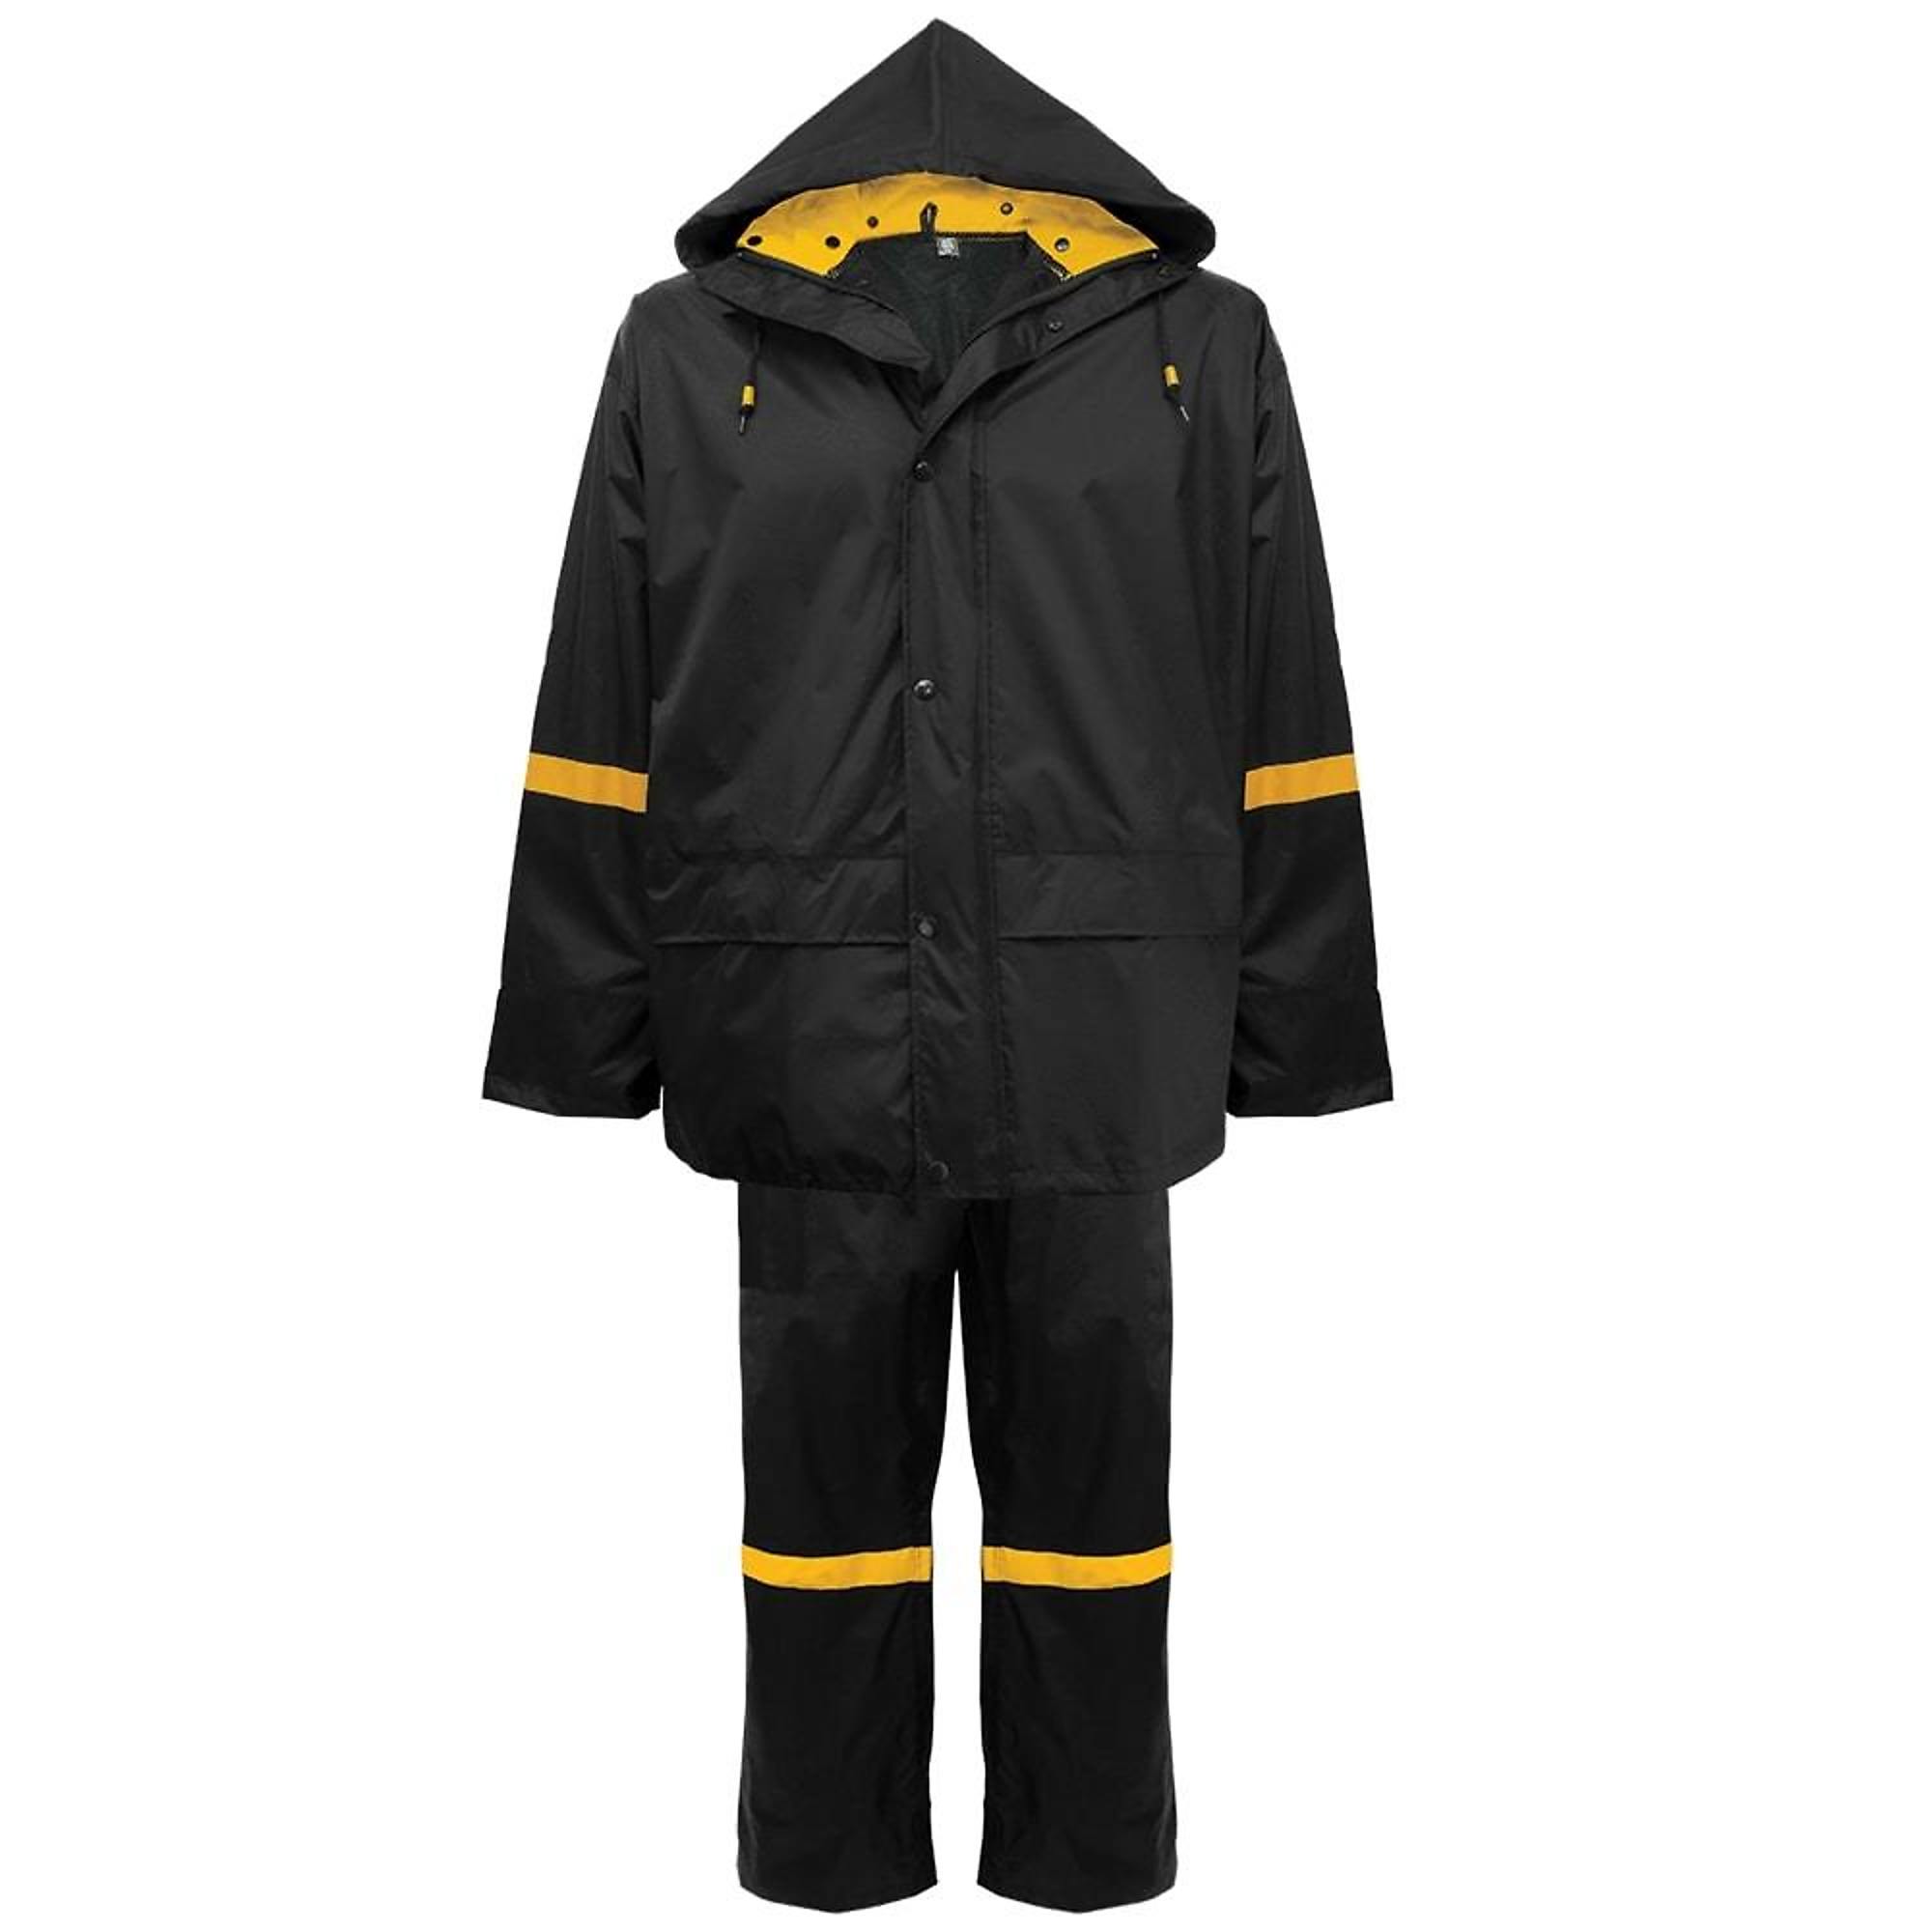 FrogWear, Black, PVC Coated, Nylon Three-Piece Rain Suit, Size 2XL, Color Black/Yellow, Model R6400-2XL